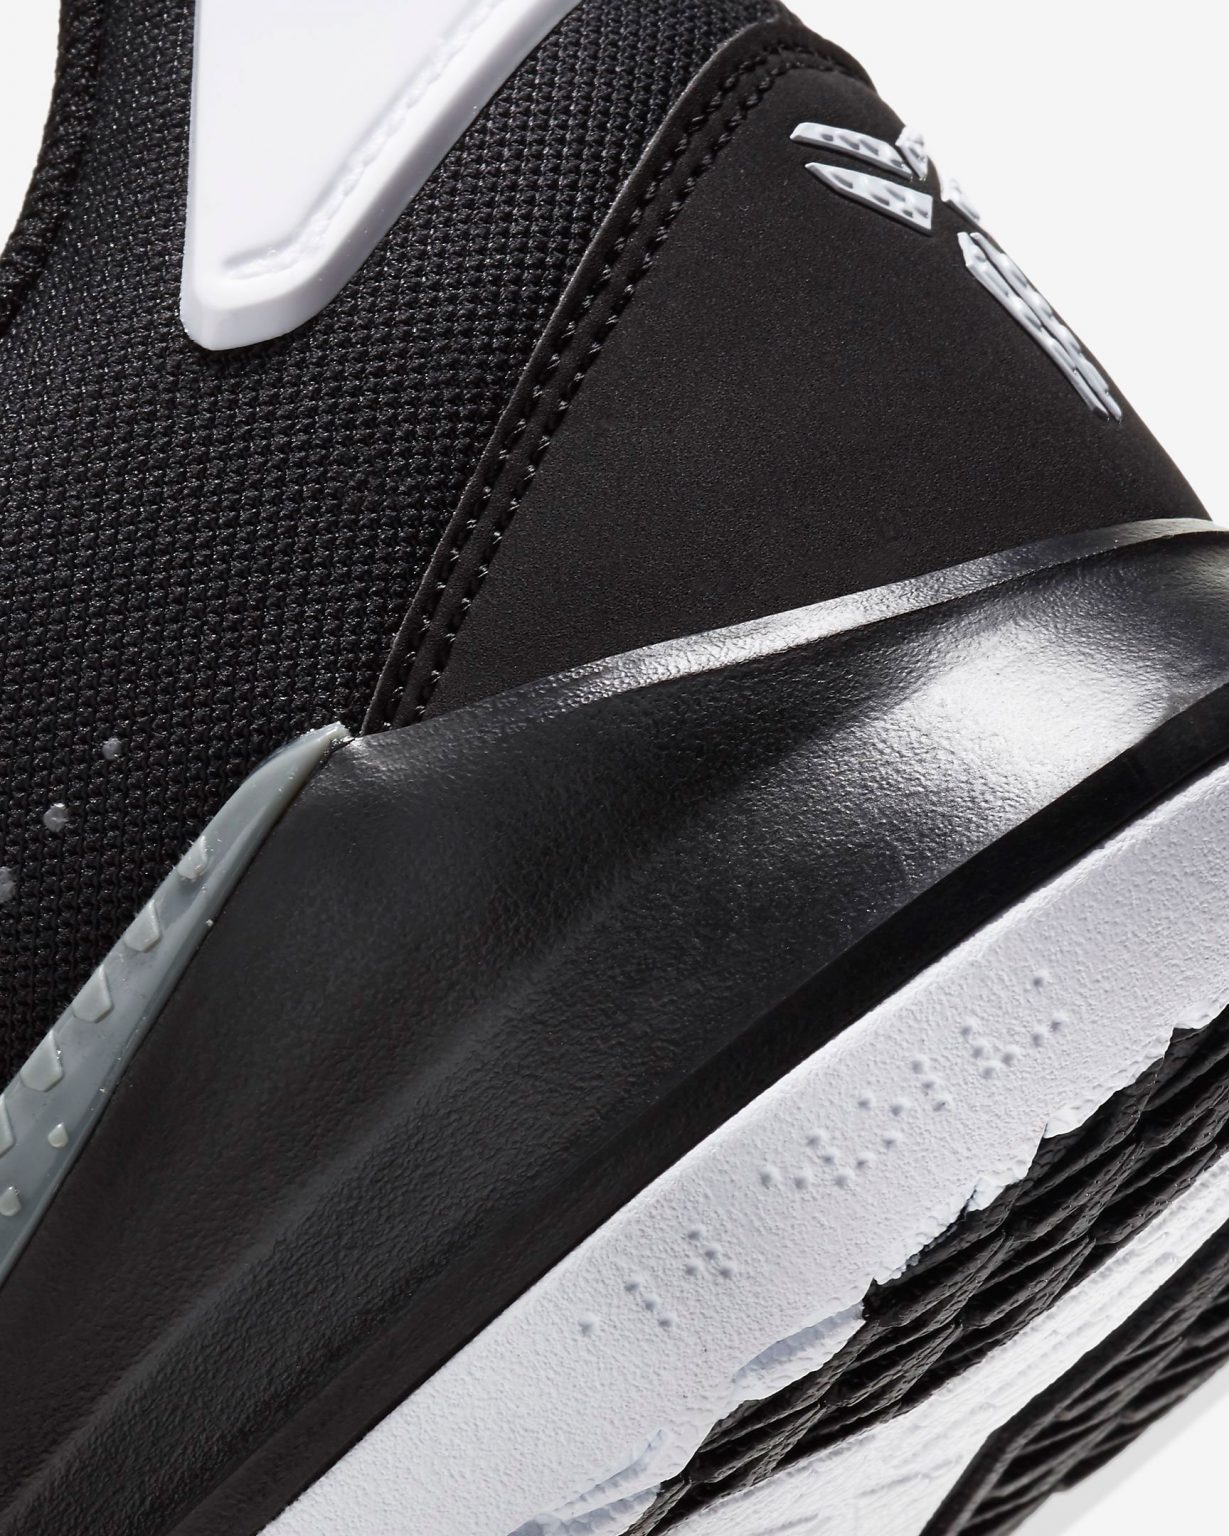 Nike Kobe Mamba Fury Black White Smoke Grey | SportFits.com